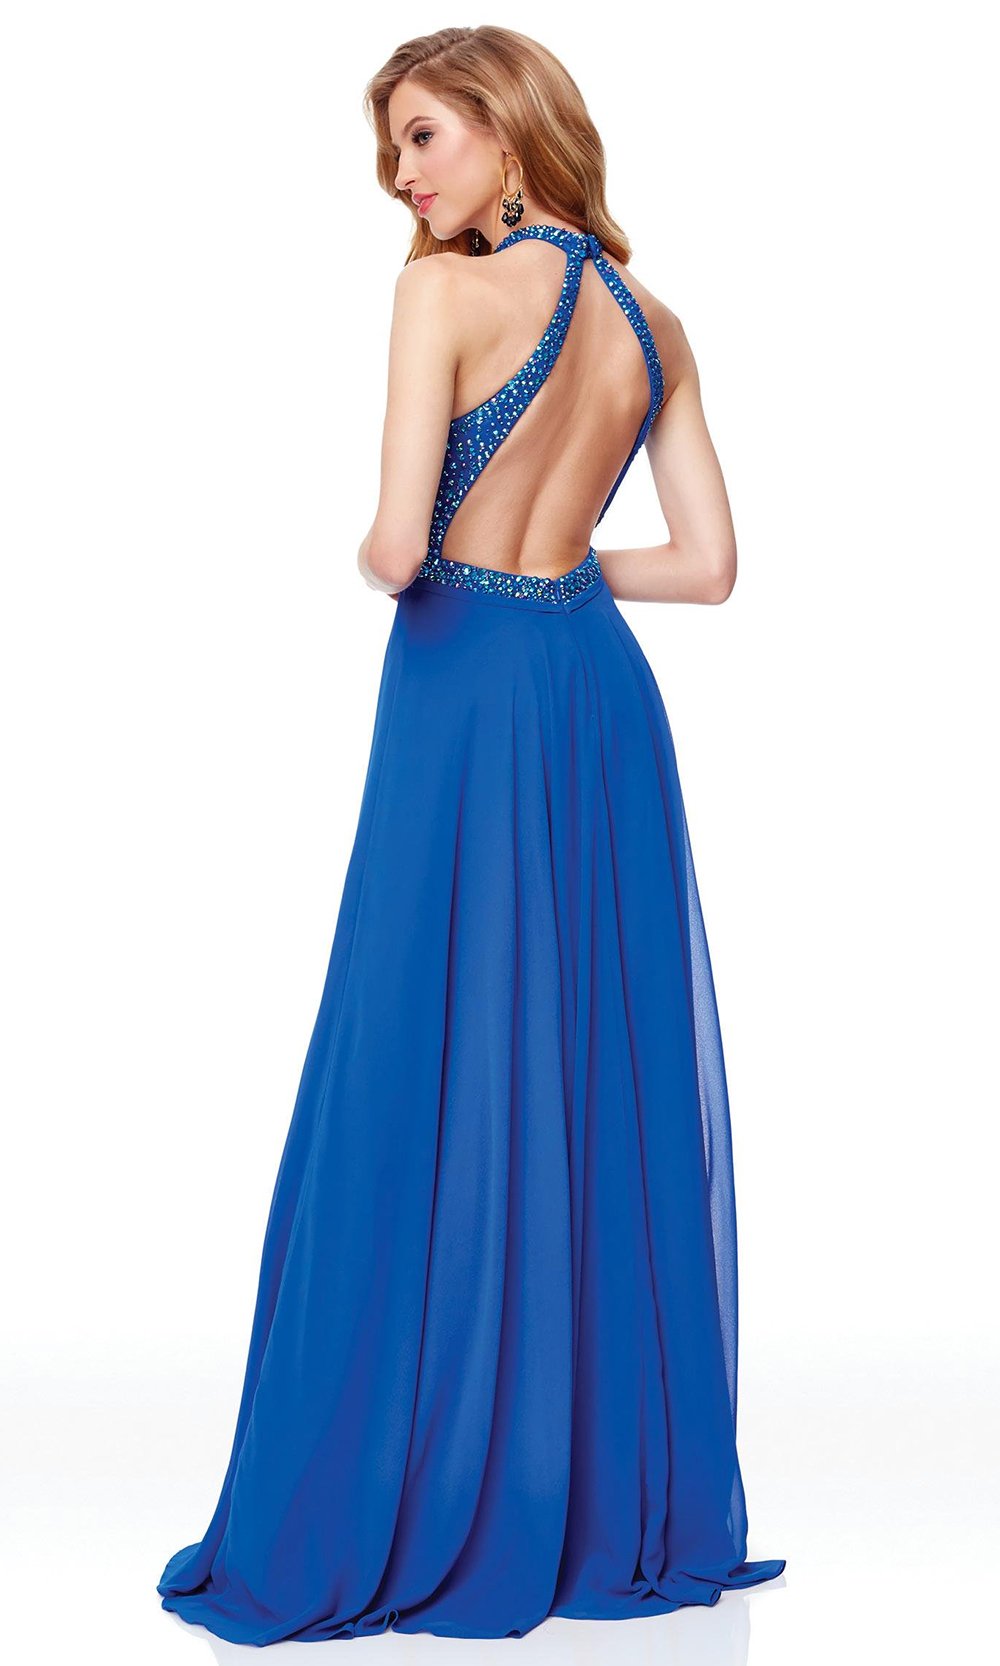 Clarisse - 3750 Rhinestone-Studded High Halter Chiffon Gown In Blue